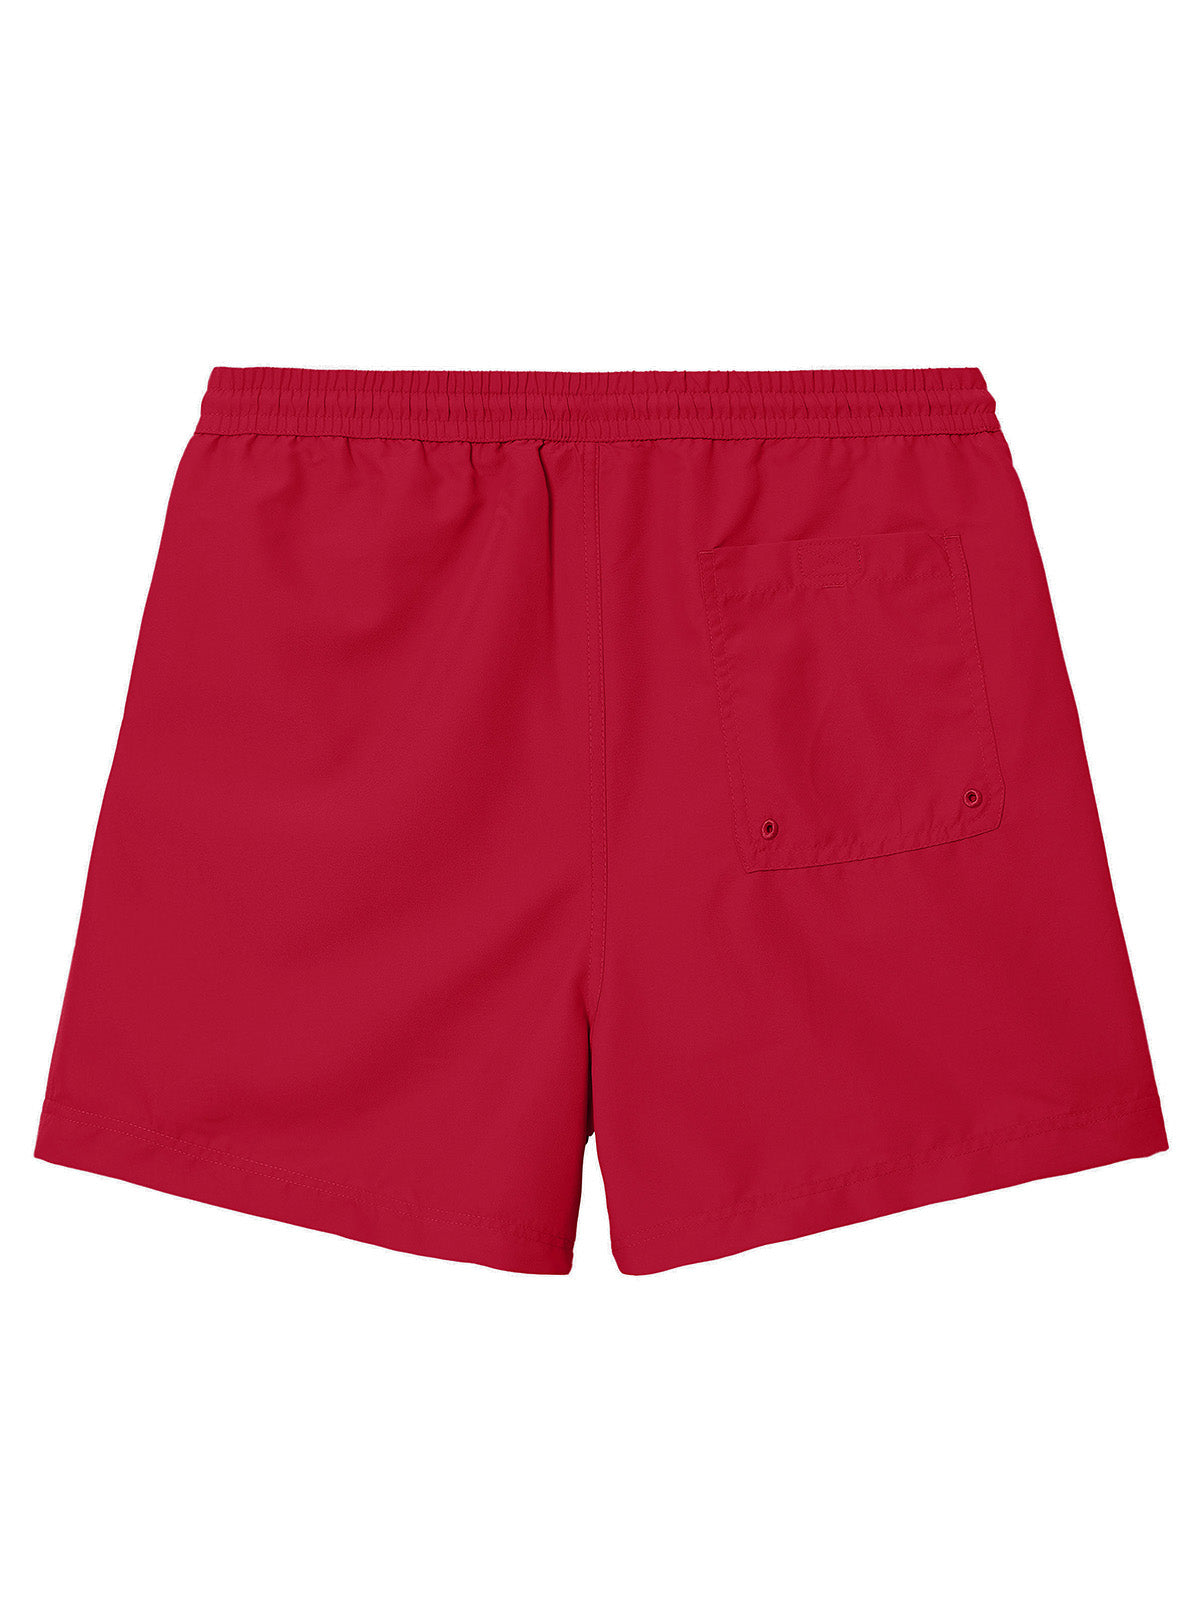 Carhartt Wip Mens Shorts &amp; Trunks - Chase Swim Trunk - Red